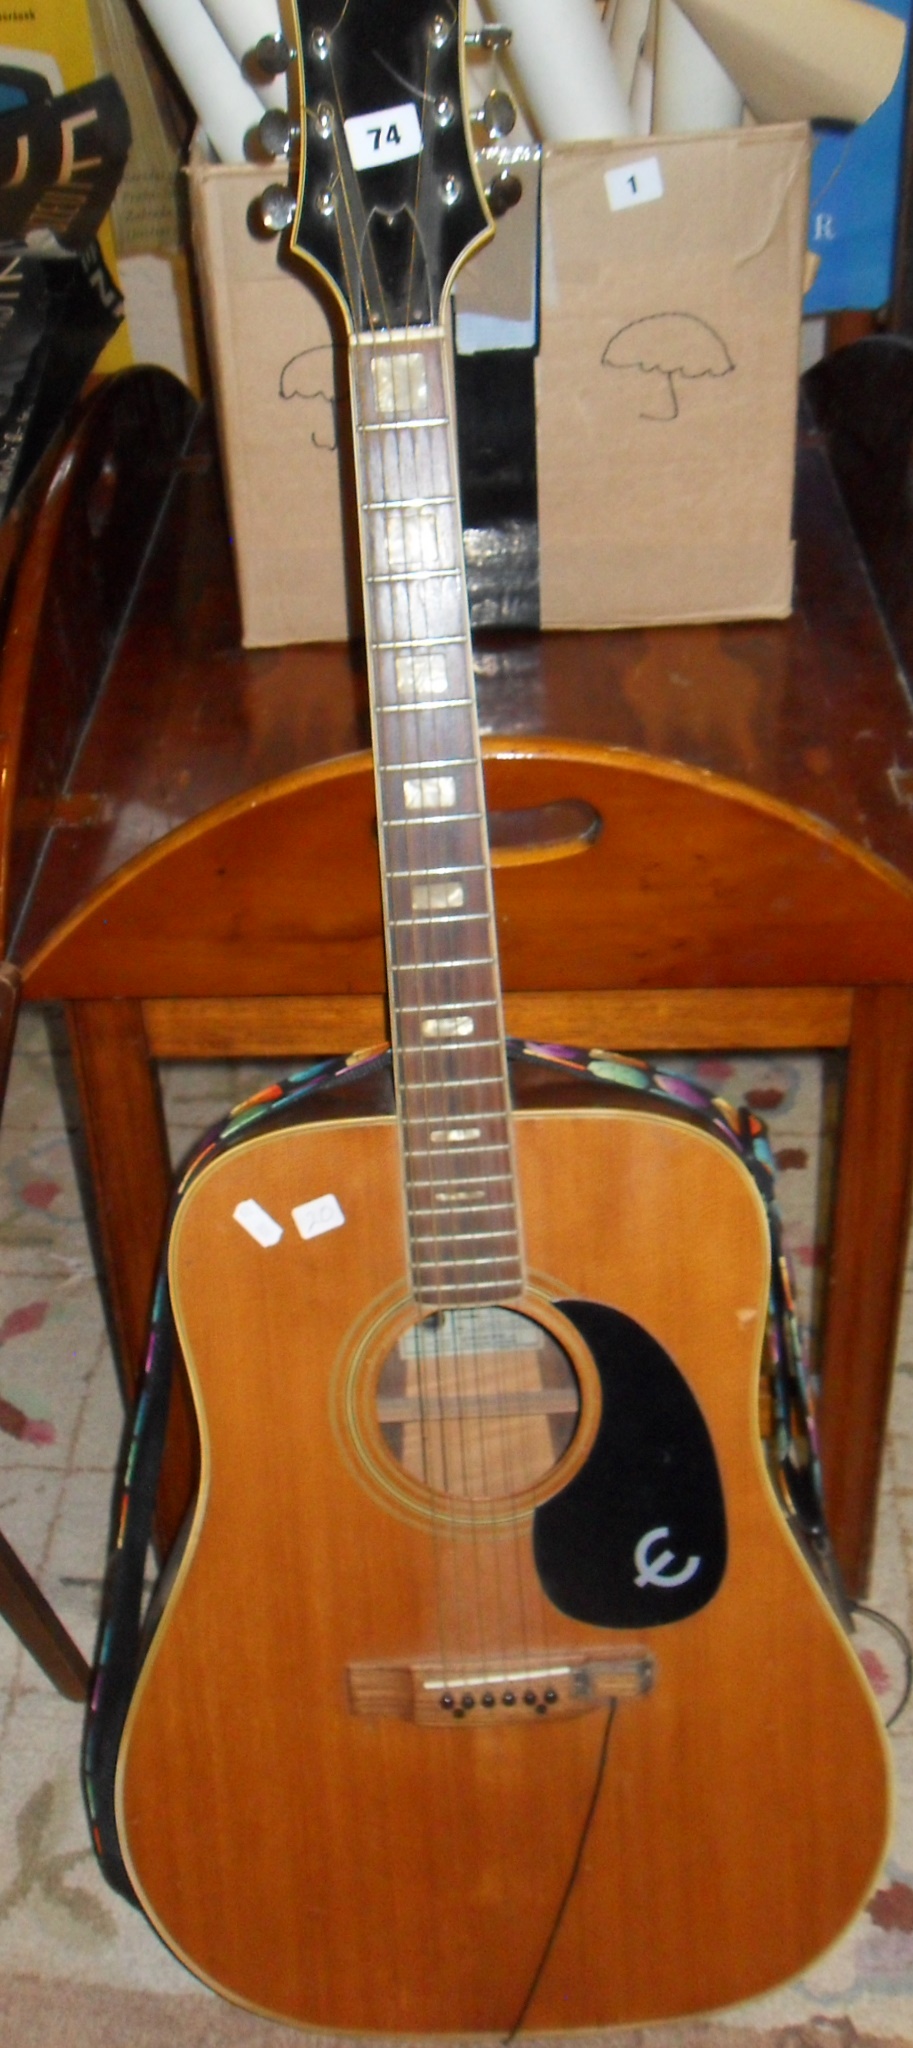 Guitar: Epiphone FT-550 Excellente jumbo acoustic guitar, S.N.7446?4 (paper label rubbed), Japan,